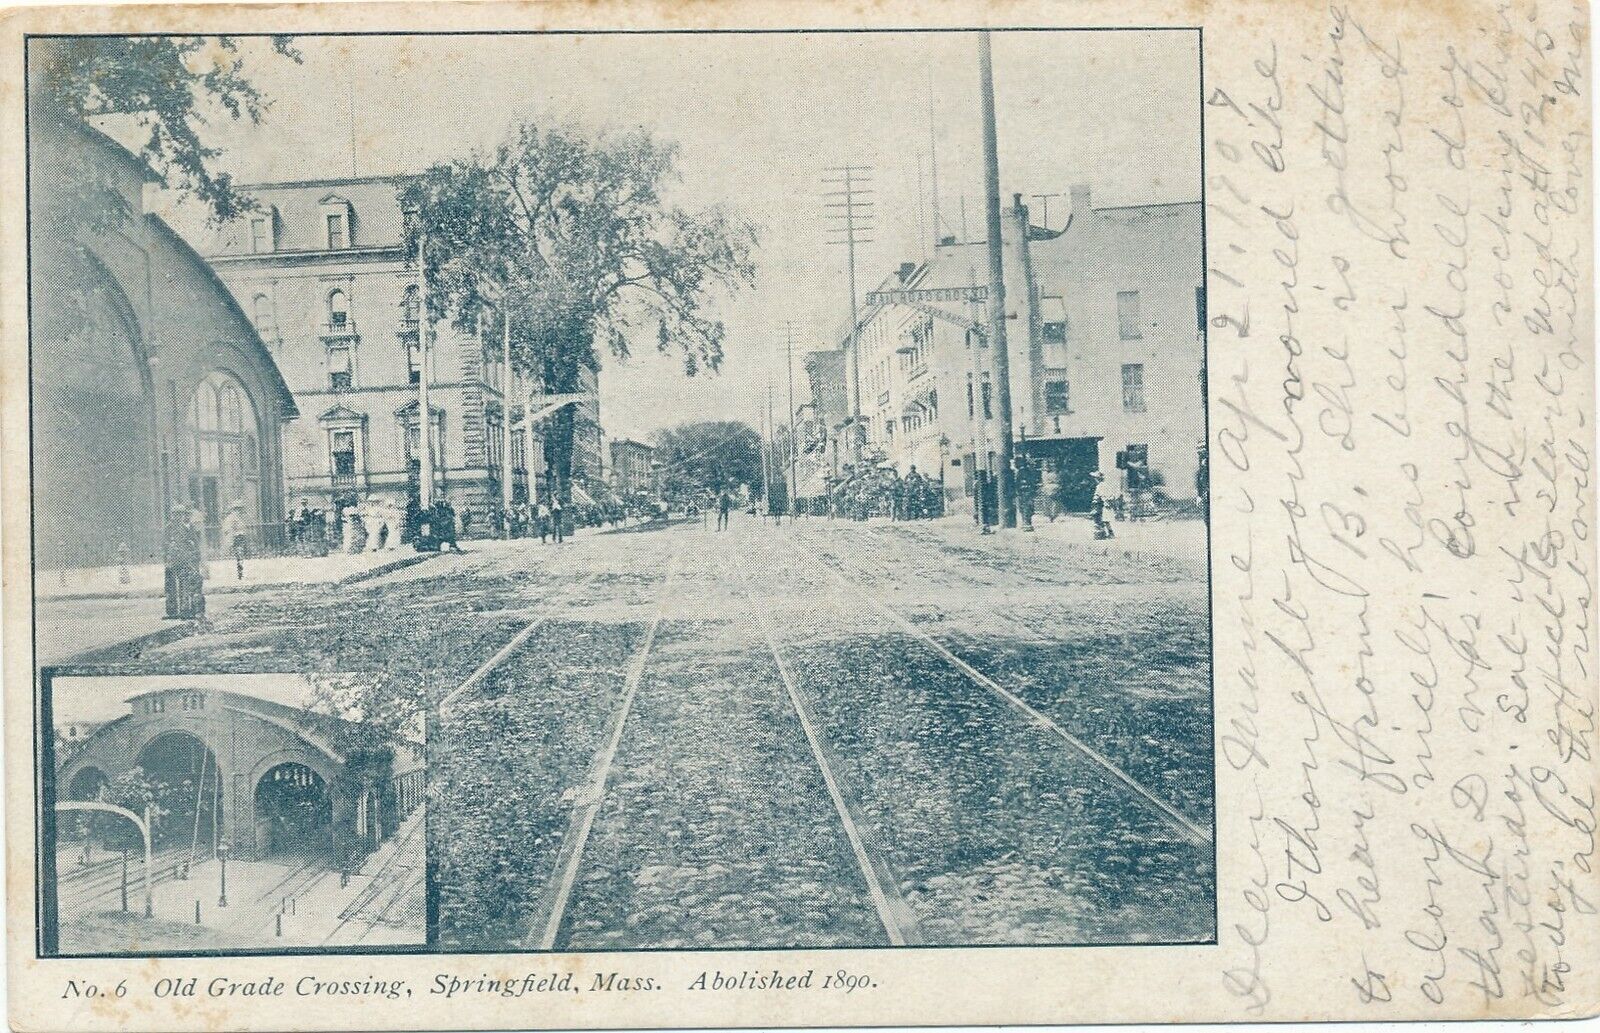 SPRINGFIELD MA – Old Grade Crossing (demolished 1890) – udb